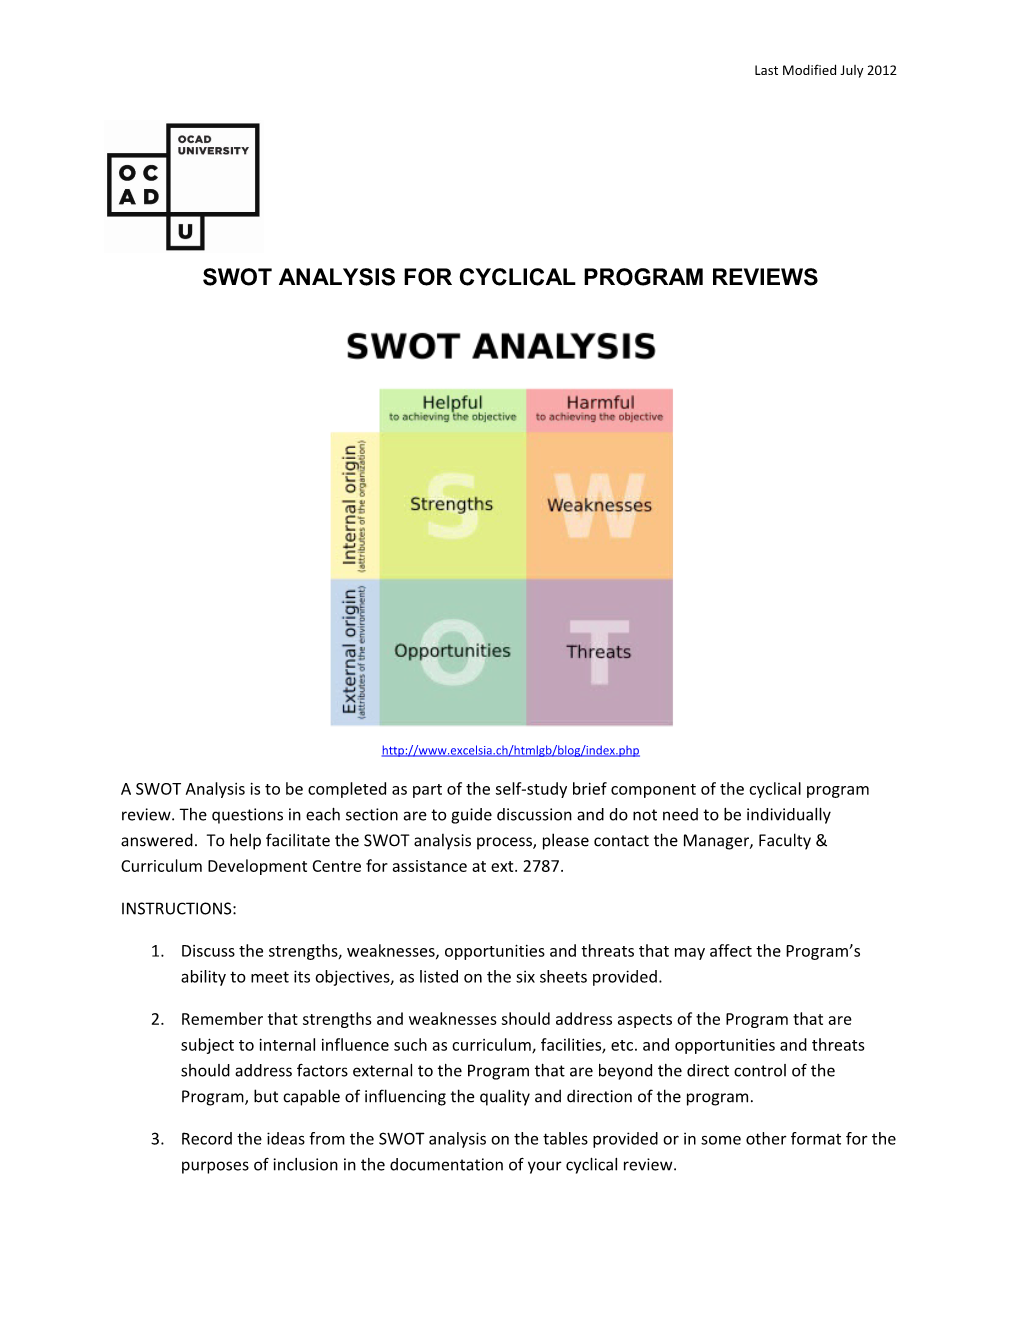 Swot Analysis for Cyclical Program Reviews